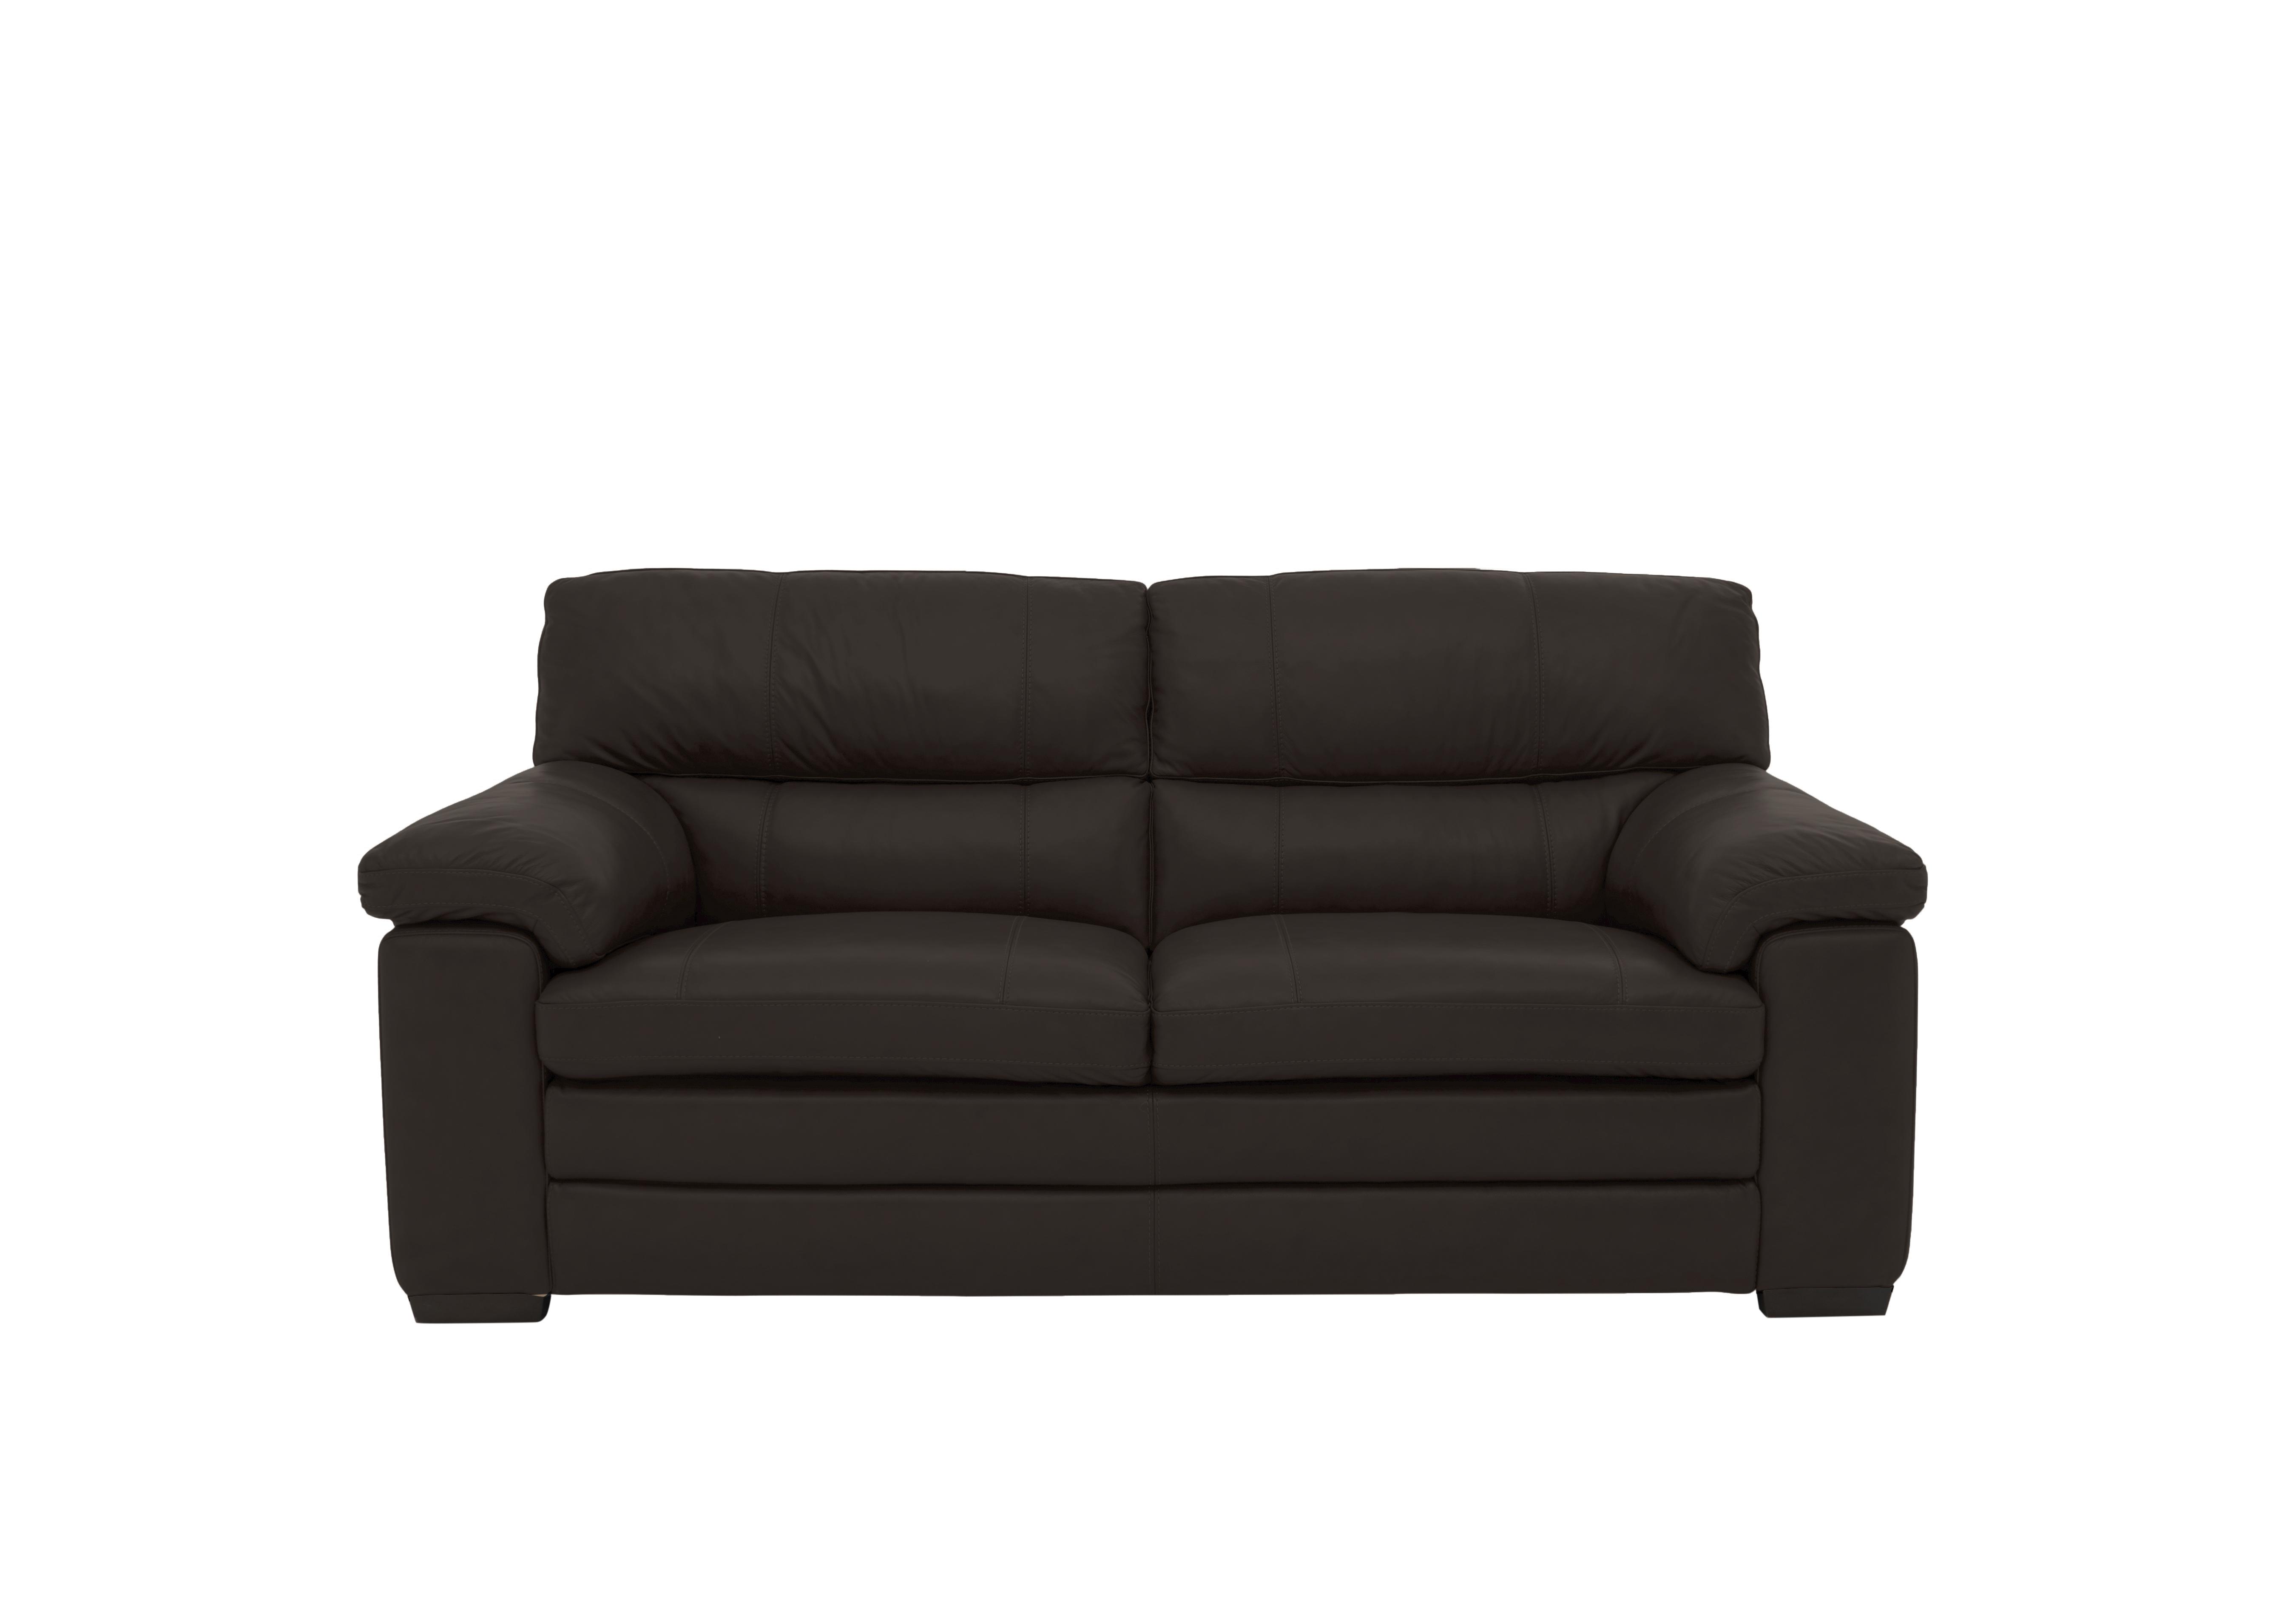 Cozee 2 Seater Pure Premium Leather Sofa in Bv-1748 Dark Chocolate on Furniture Village